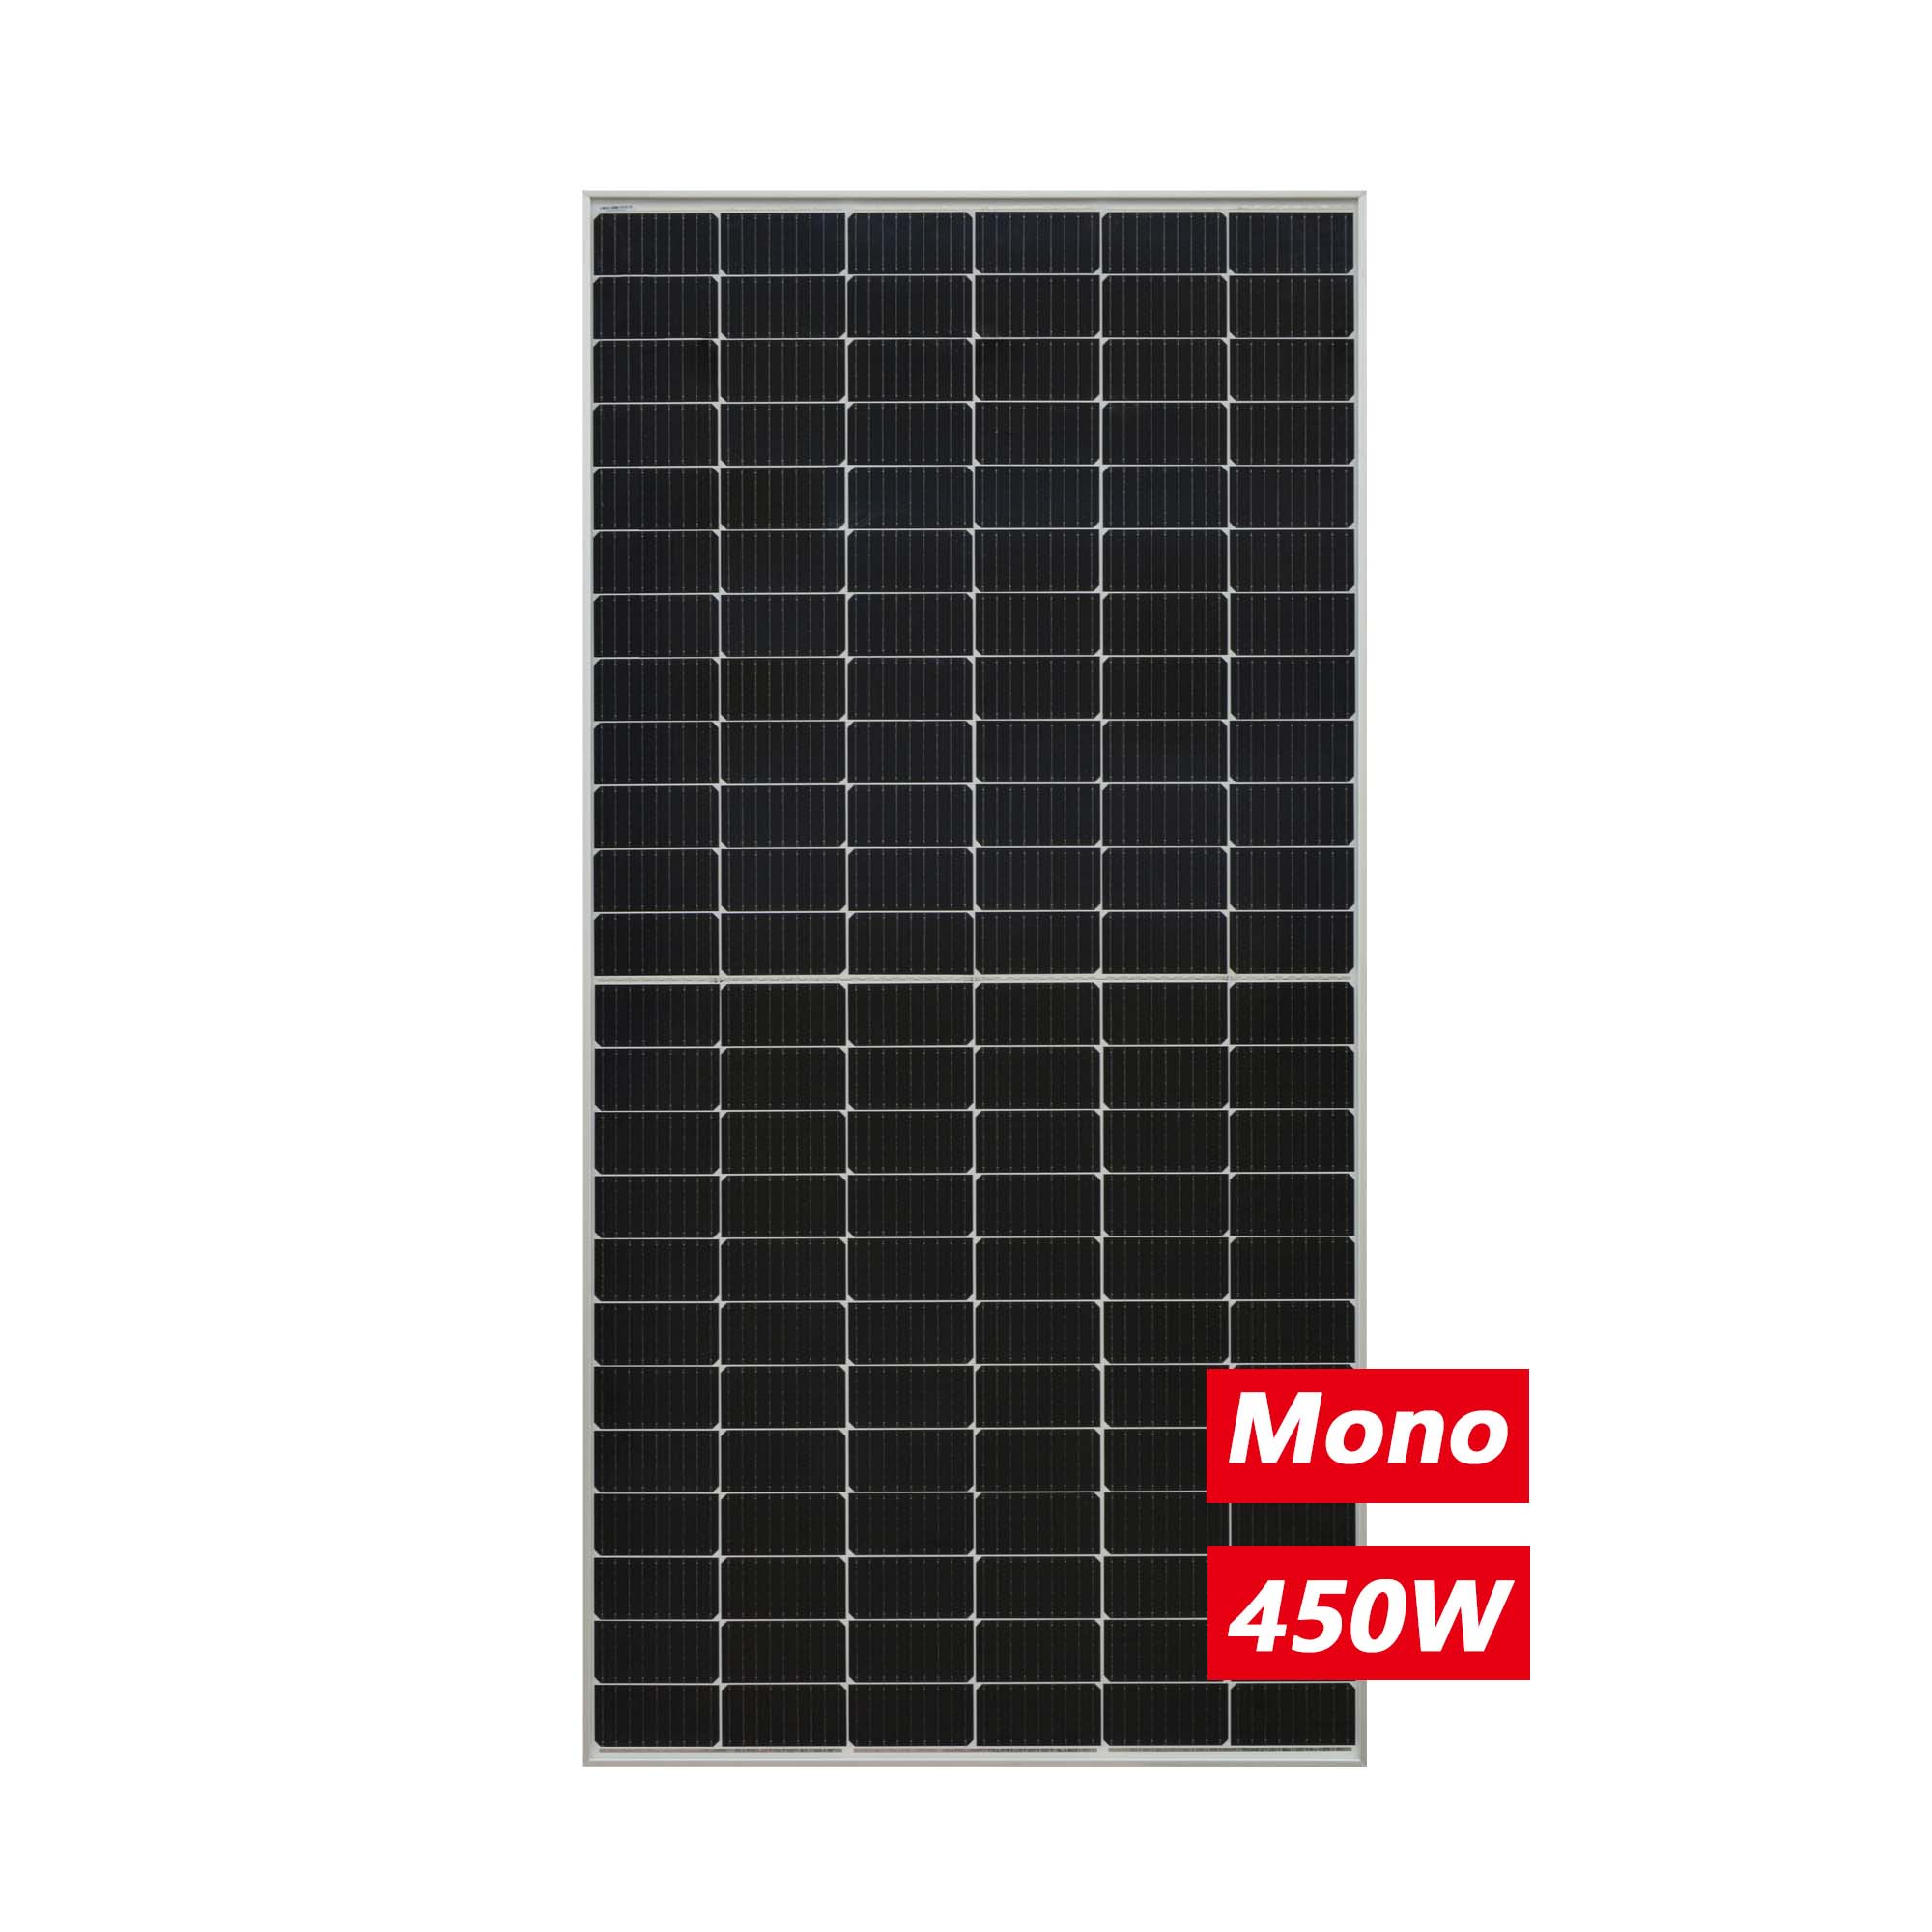 36v 450w photovoltaic monocrystalline solar panel home kit